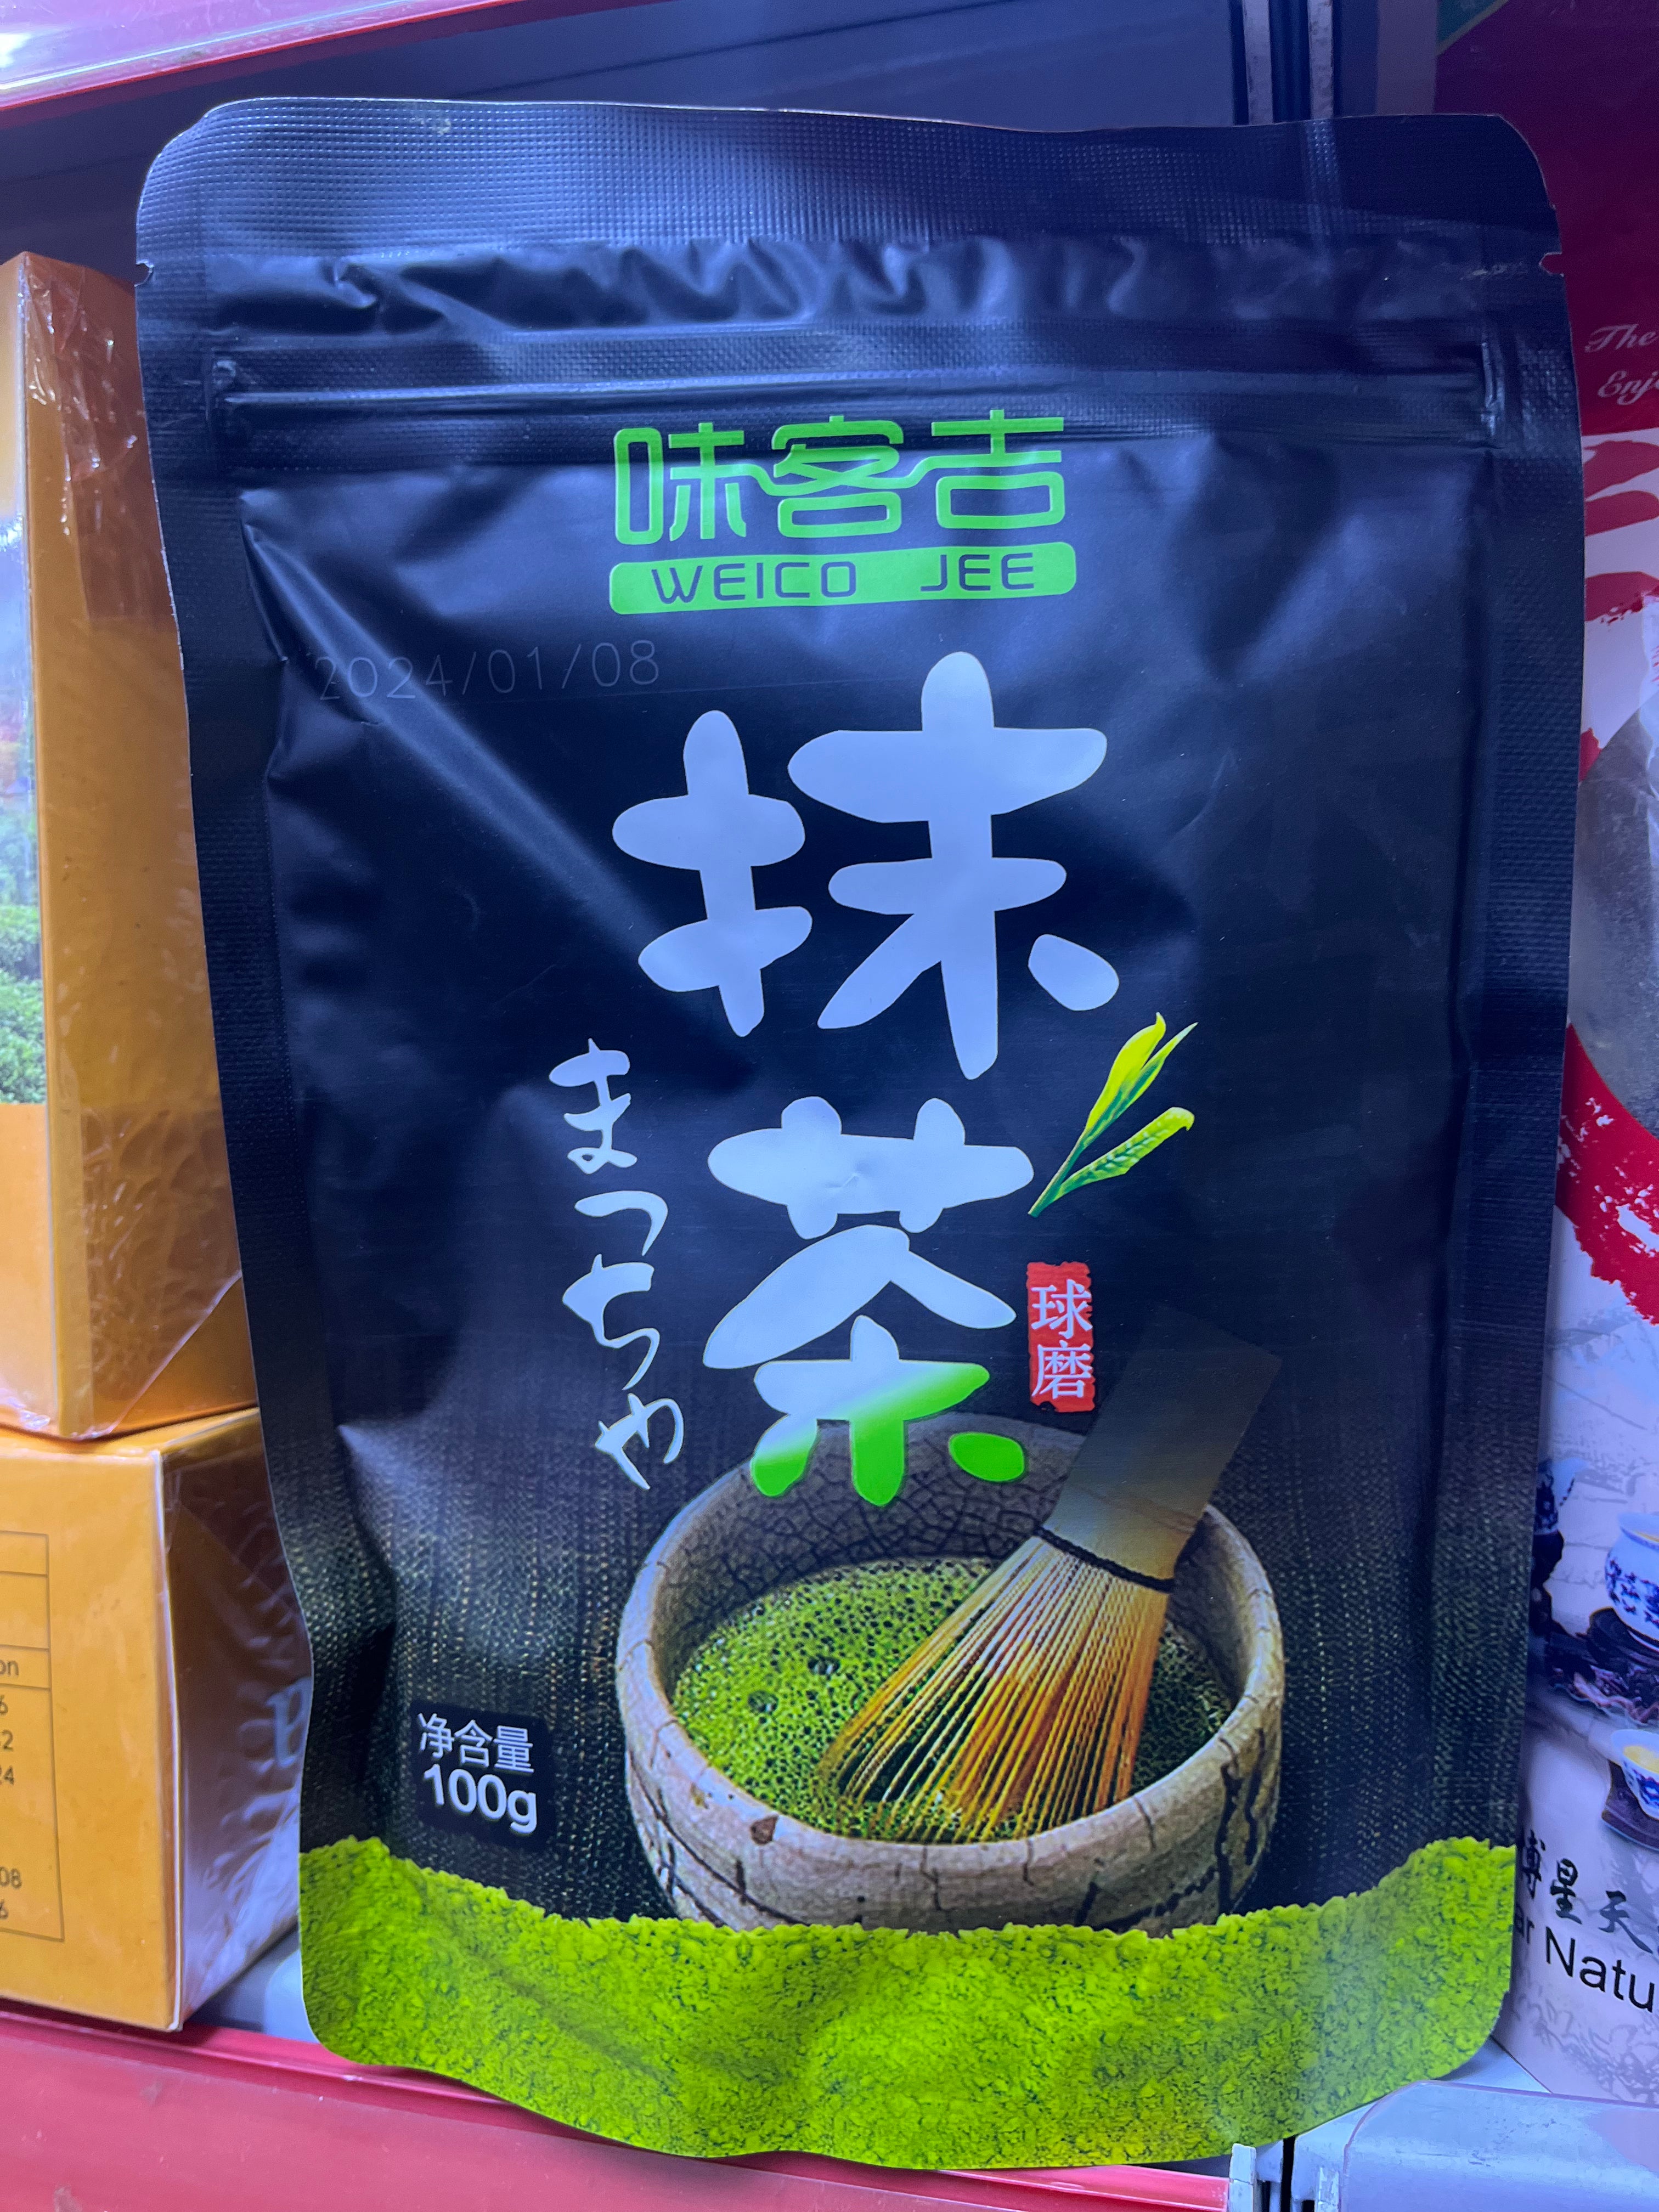 Té verde en polvo ( Matcha ) x 100 gr Weico Jee